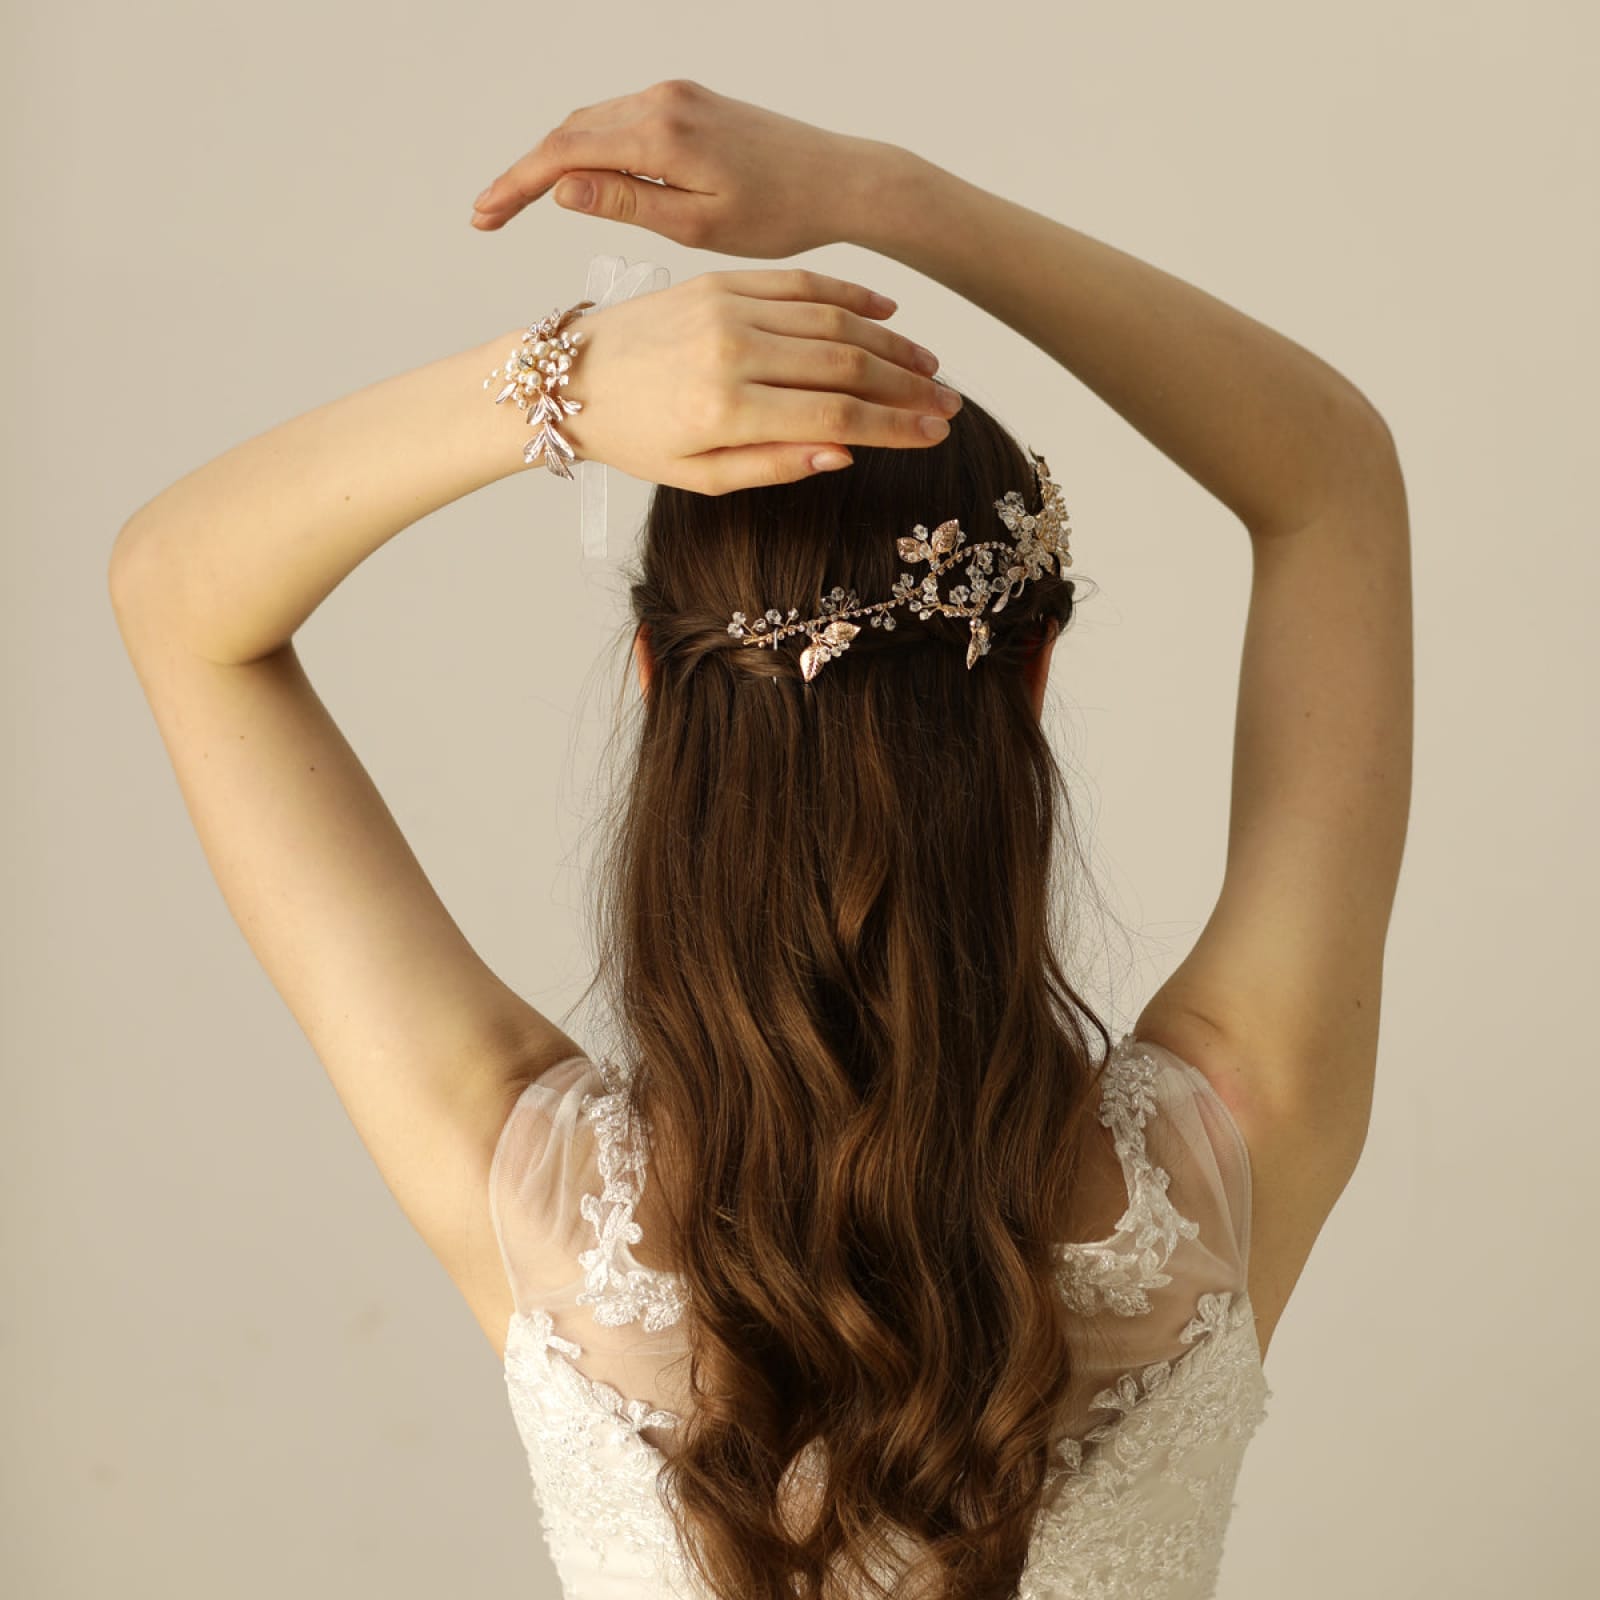 Girls Bridesmaid Flowers Pearl Bracelet Crystal Wedding Prom Party Wedding Accessories